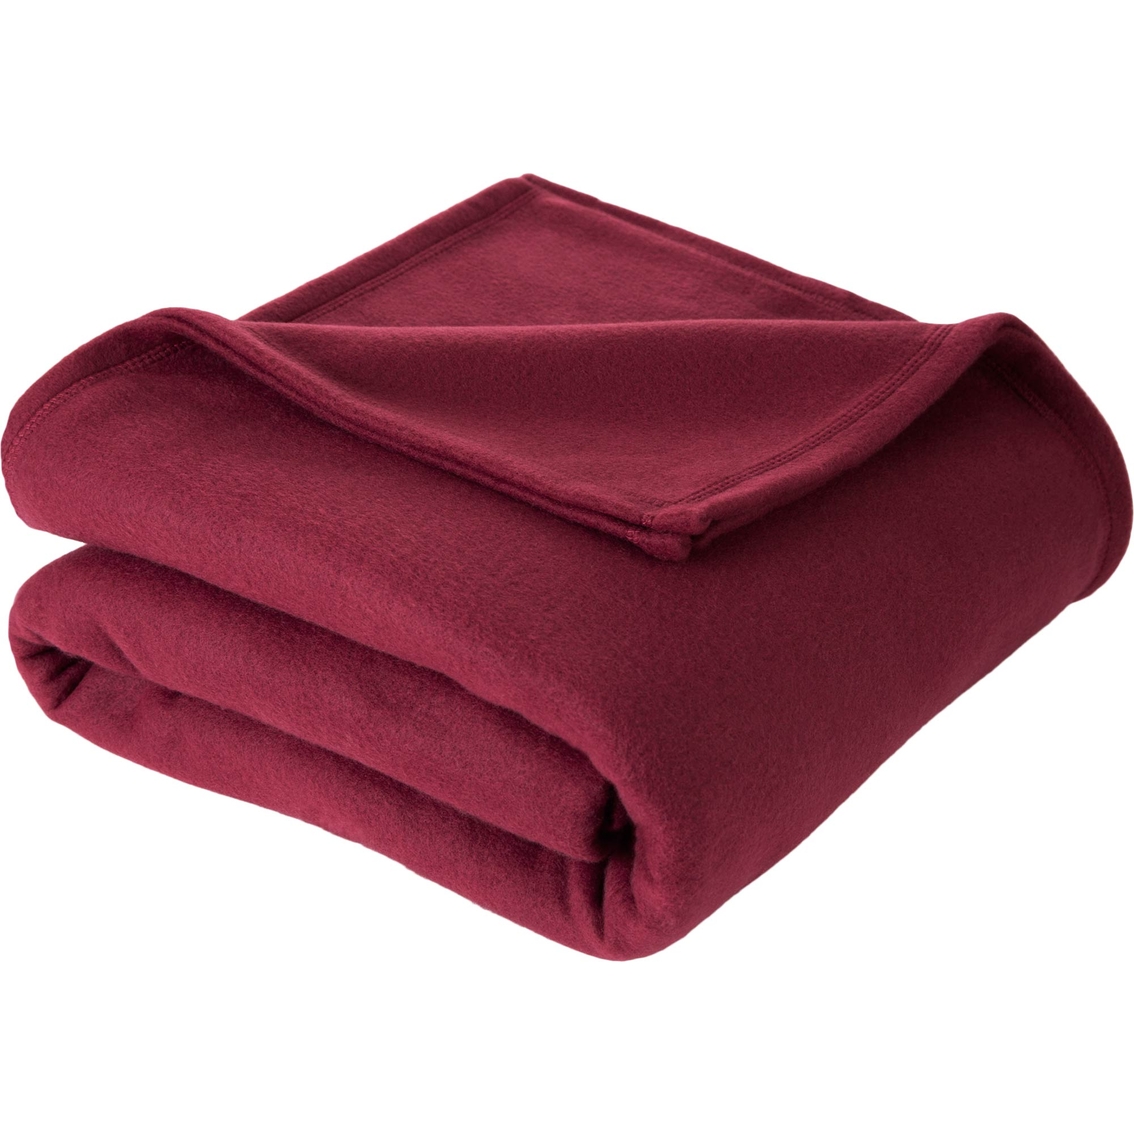 Martex Super Soft Fleece Blanket | Blankets & Throws | Home ...